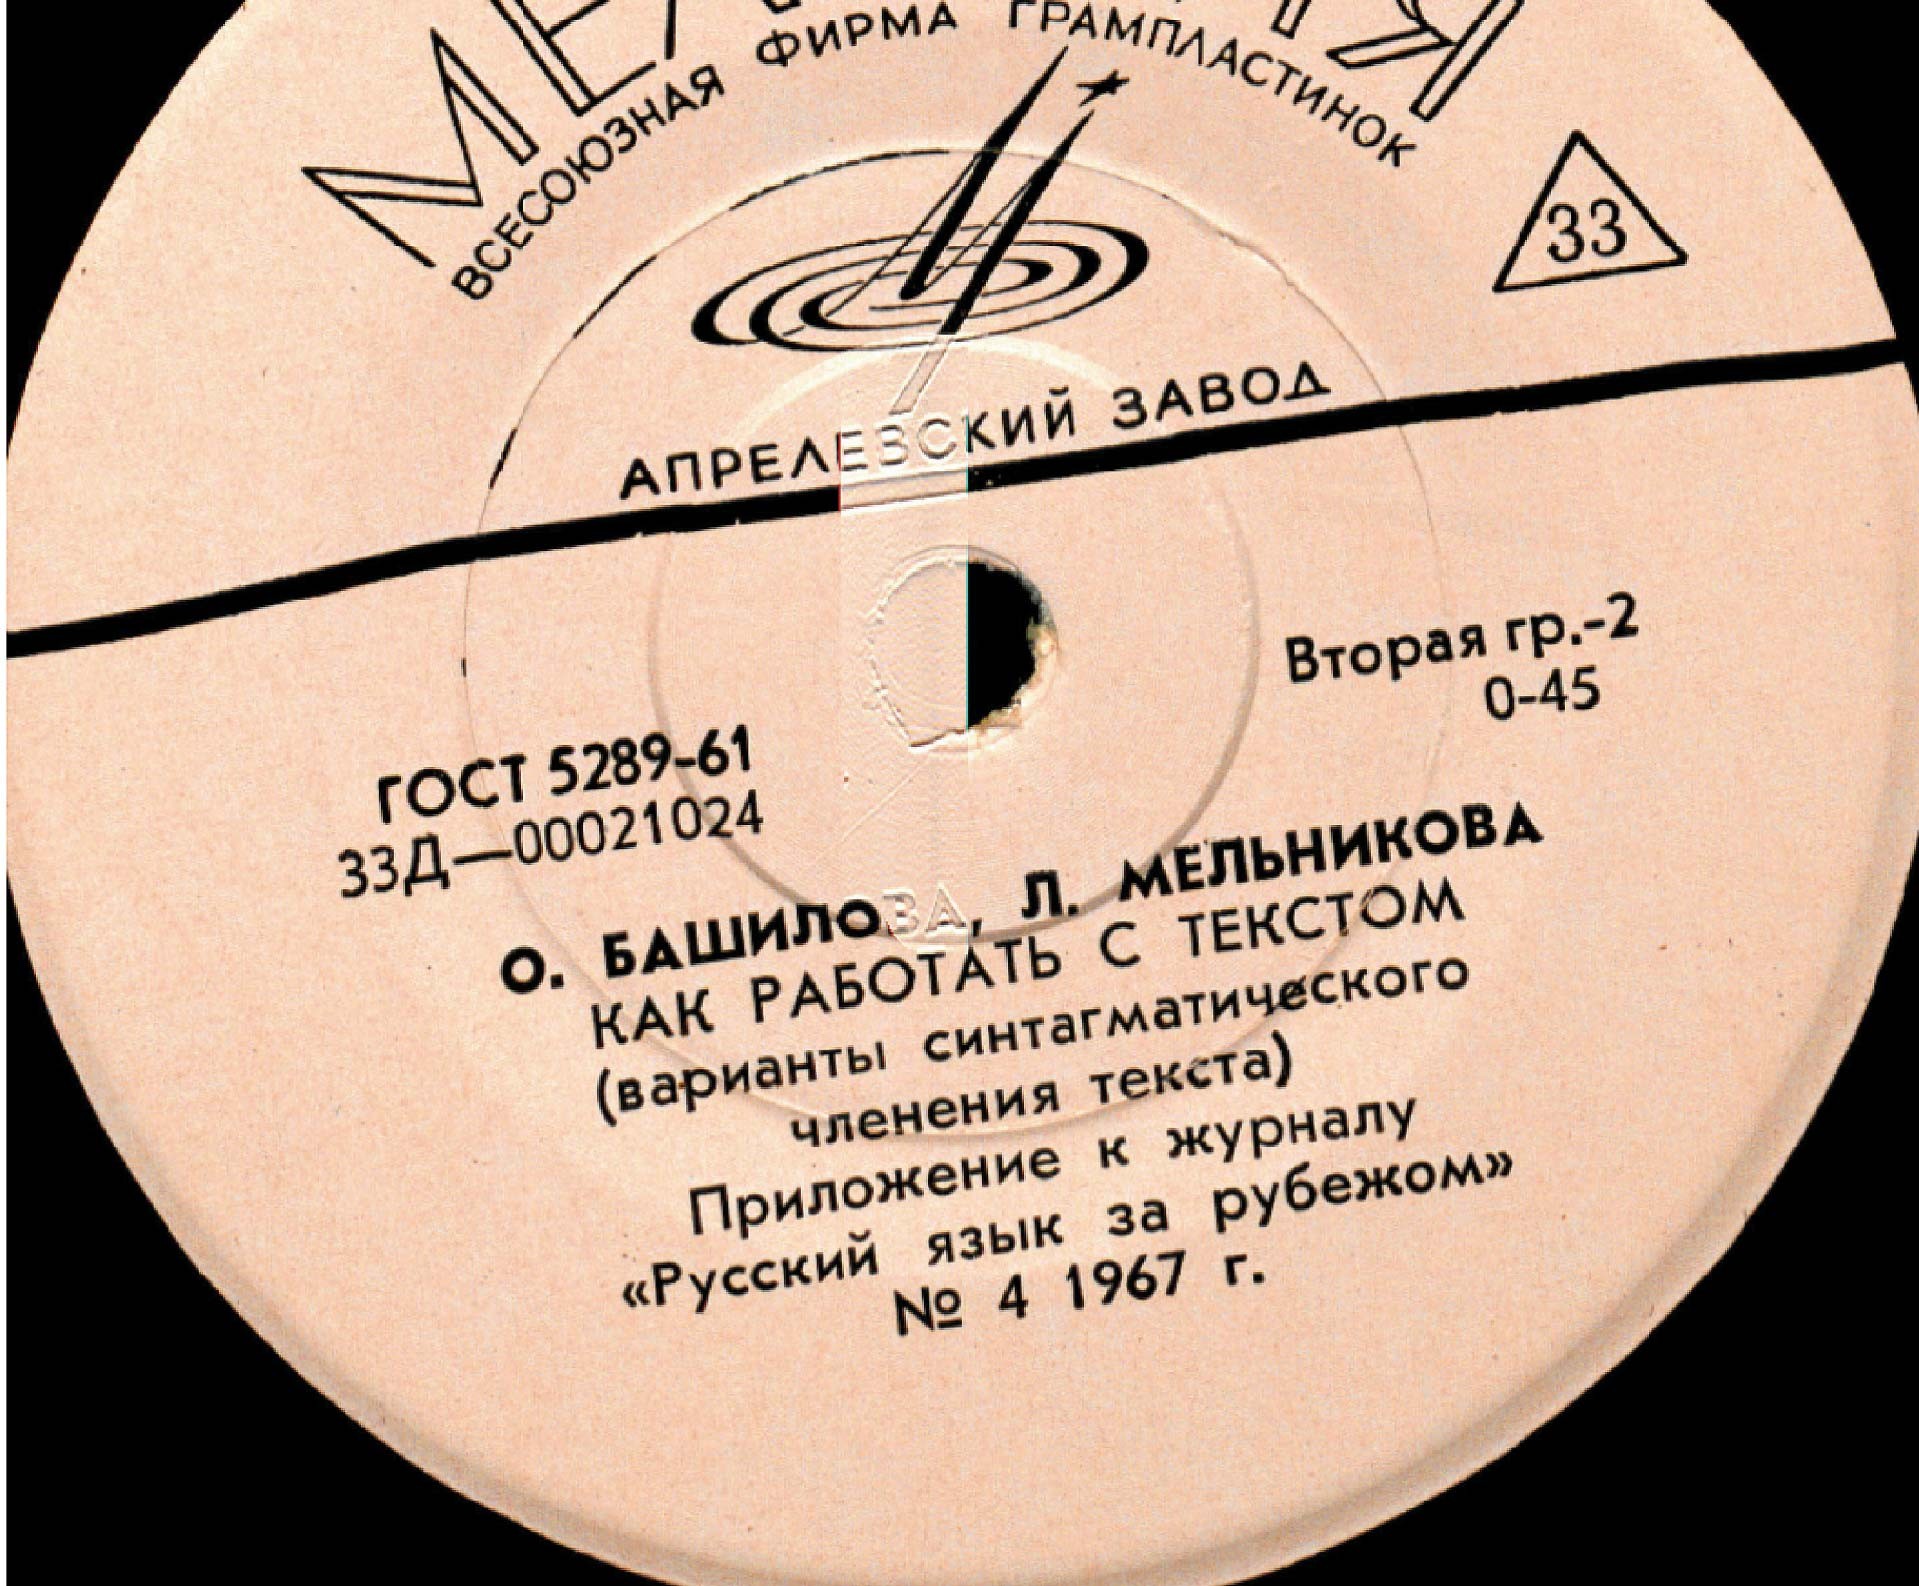 "РУССКИЙ ЯЗЫК ЗА РУБЕЖОМ", № 4 - 1967